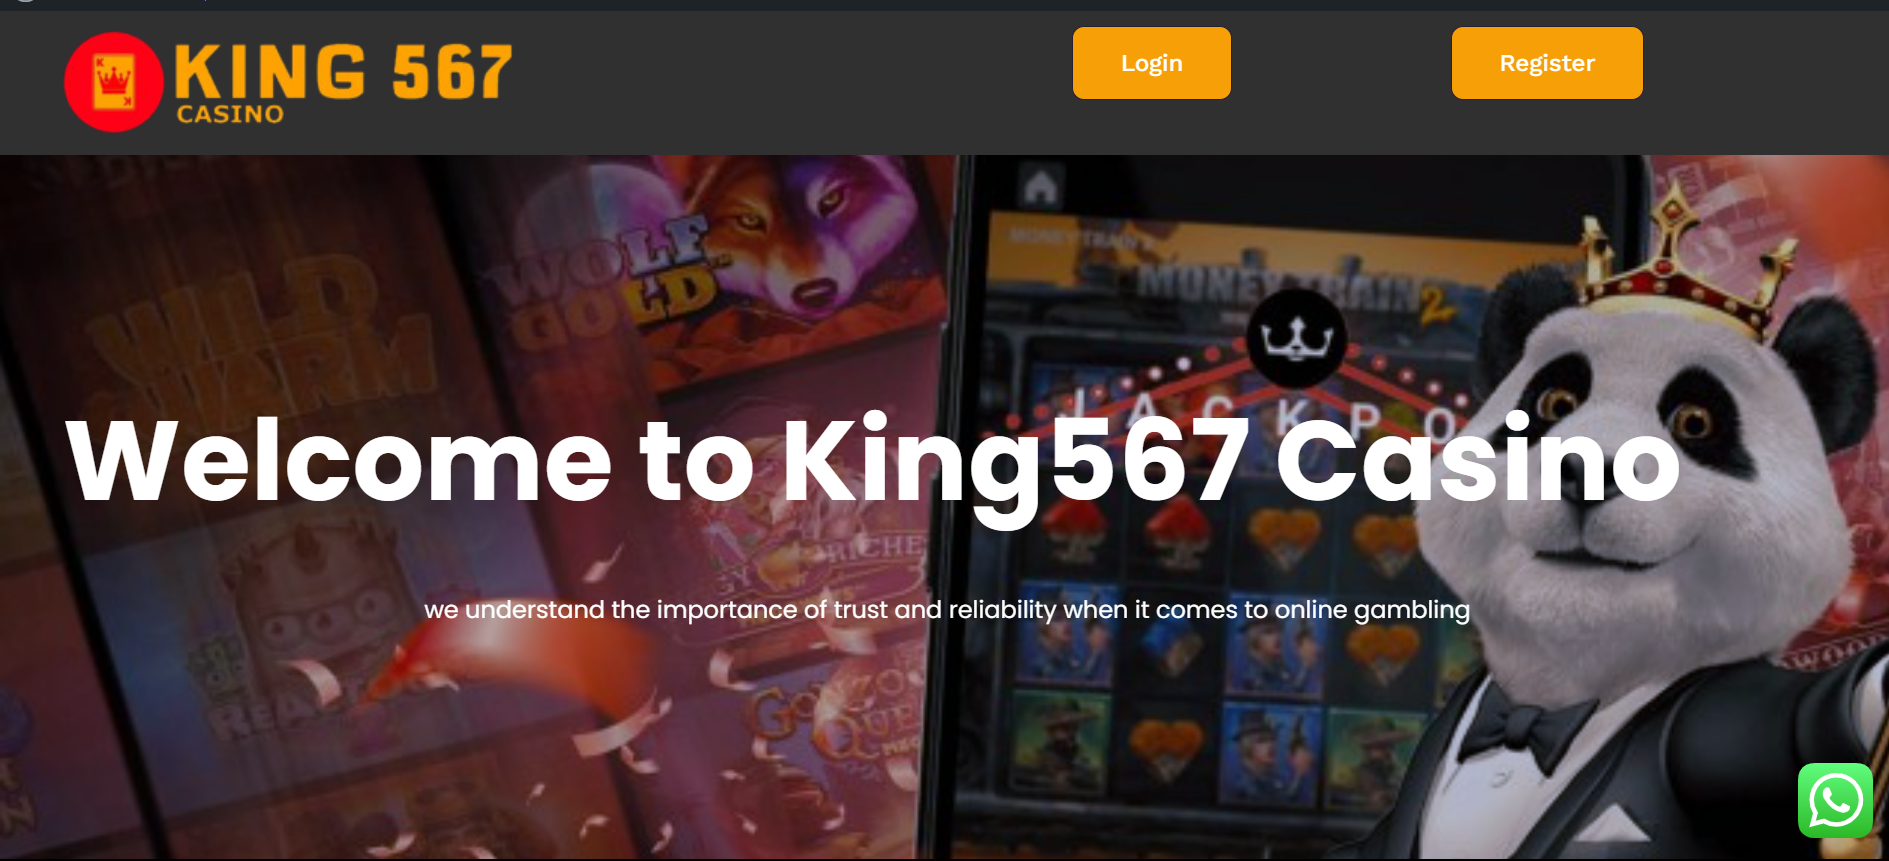 King567 scam website or not